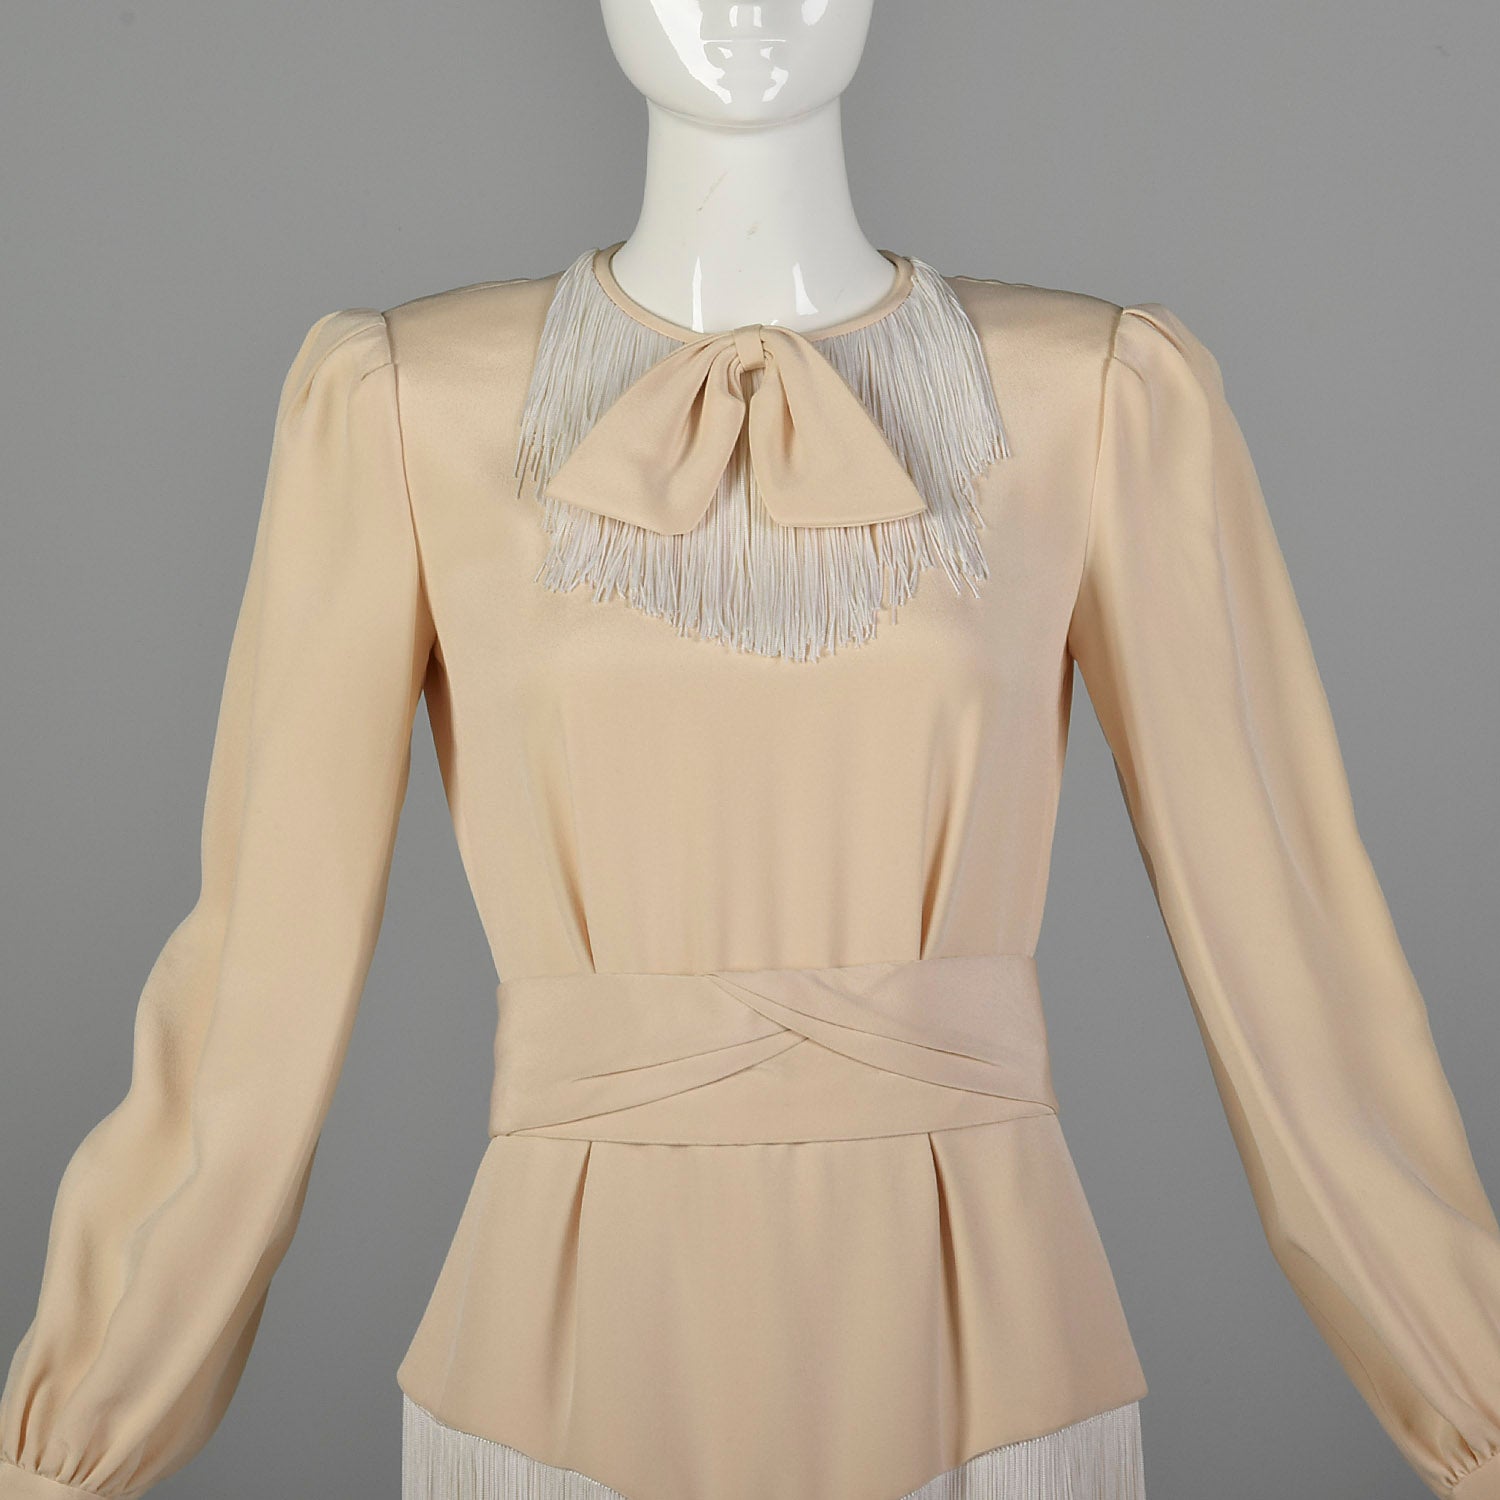 1969 André Laug for Audrey Hepburn Fringe Gown